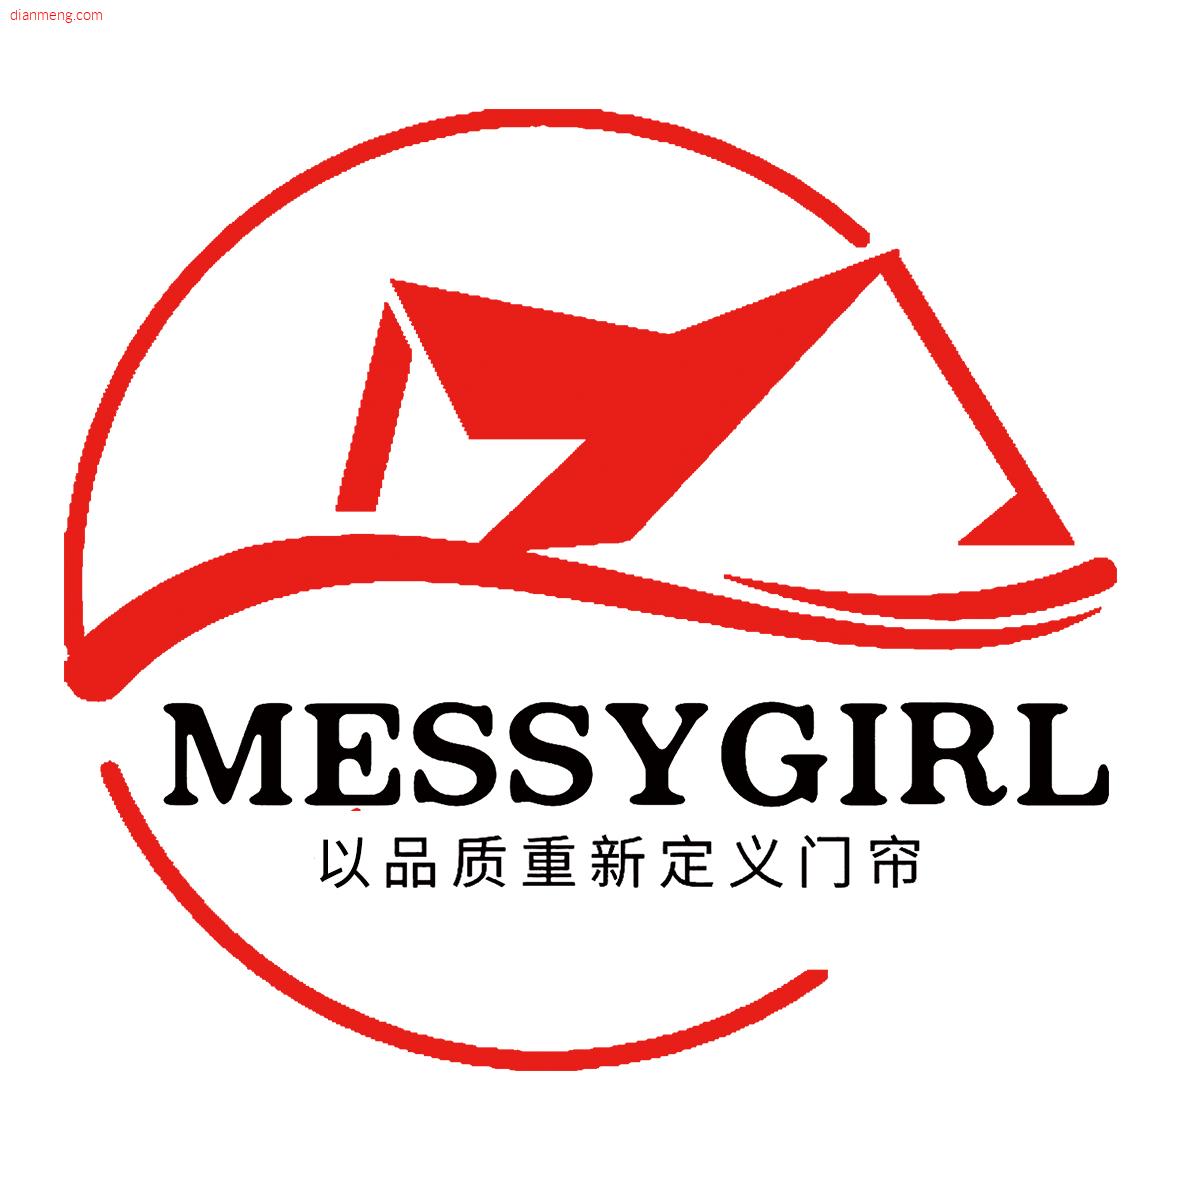 messygirl旗舰店LOGO